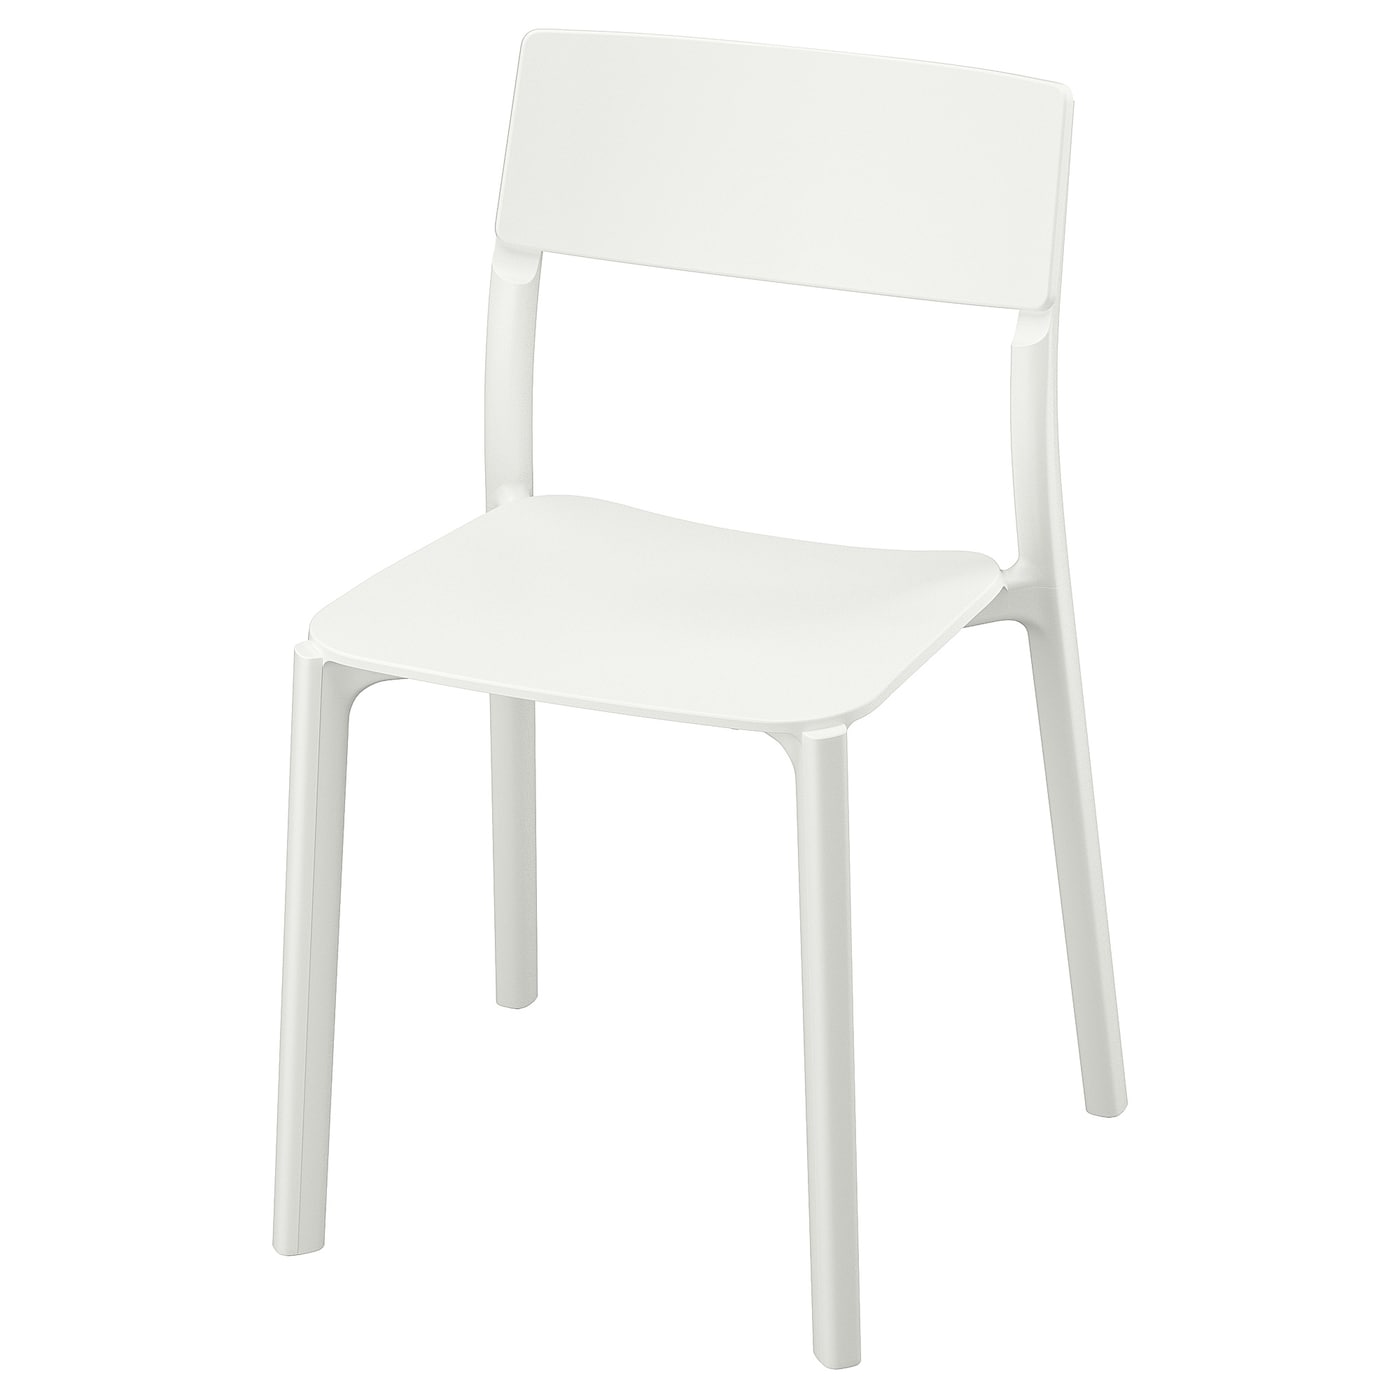 Стул - IKEA JANINGE,76х50х46 см. пластик белый, ЯНИНГЕ ИКЕА